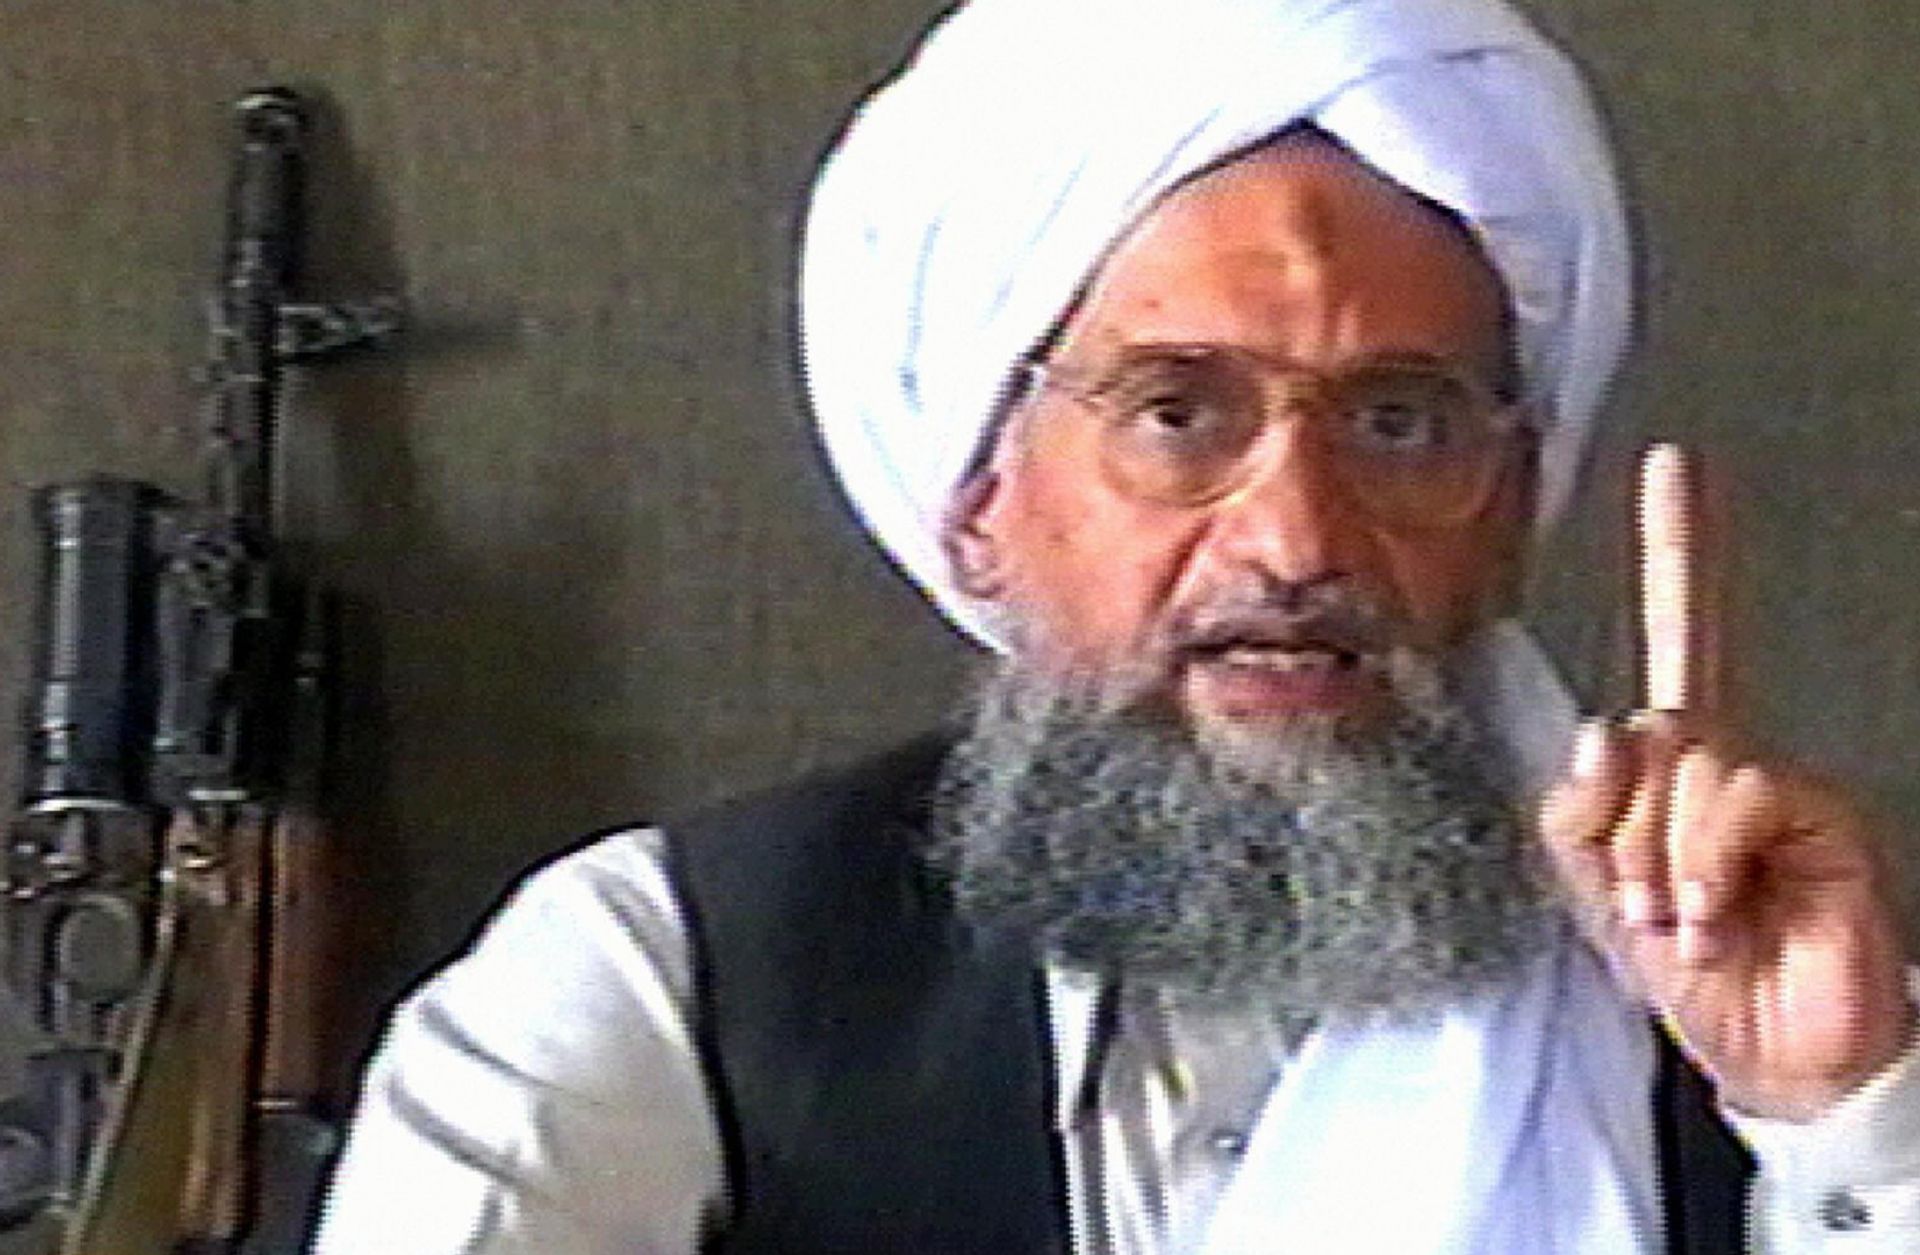 A TV grab from the Qatar-based Al Jazeera dated June 17, 2005, shows al Qaeda leader Ayman al-Zawahiri delivering a speech at an undisclosed location.